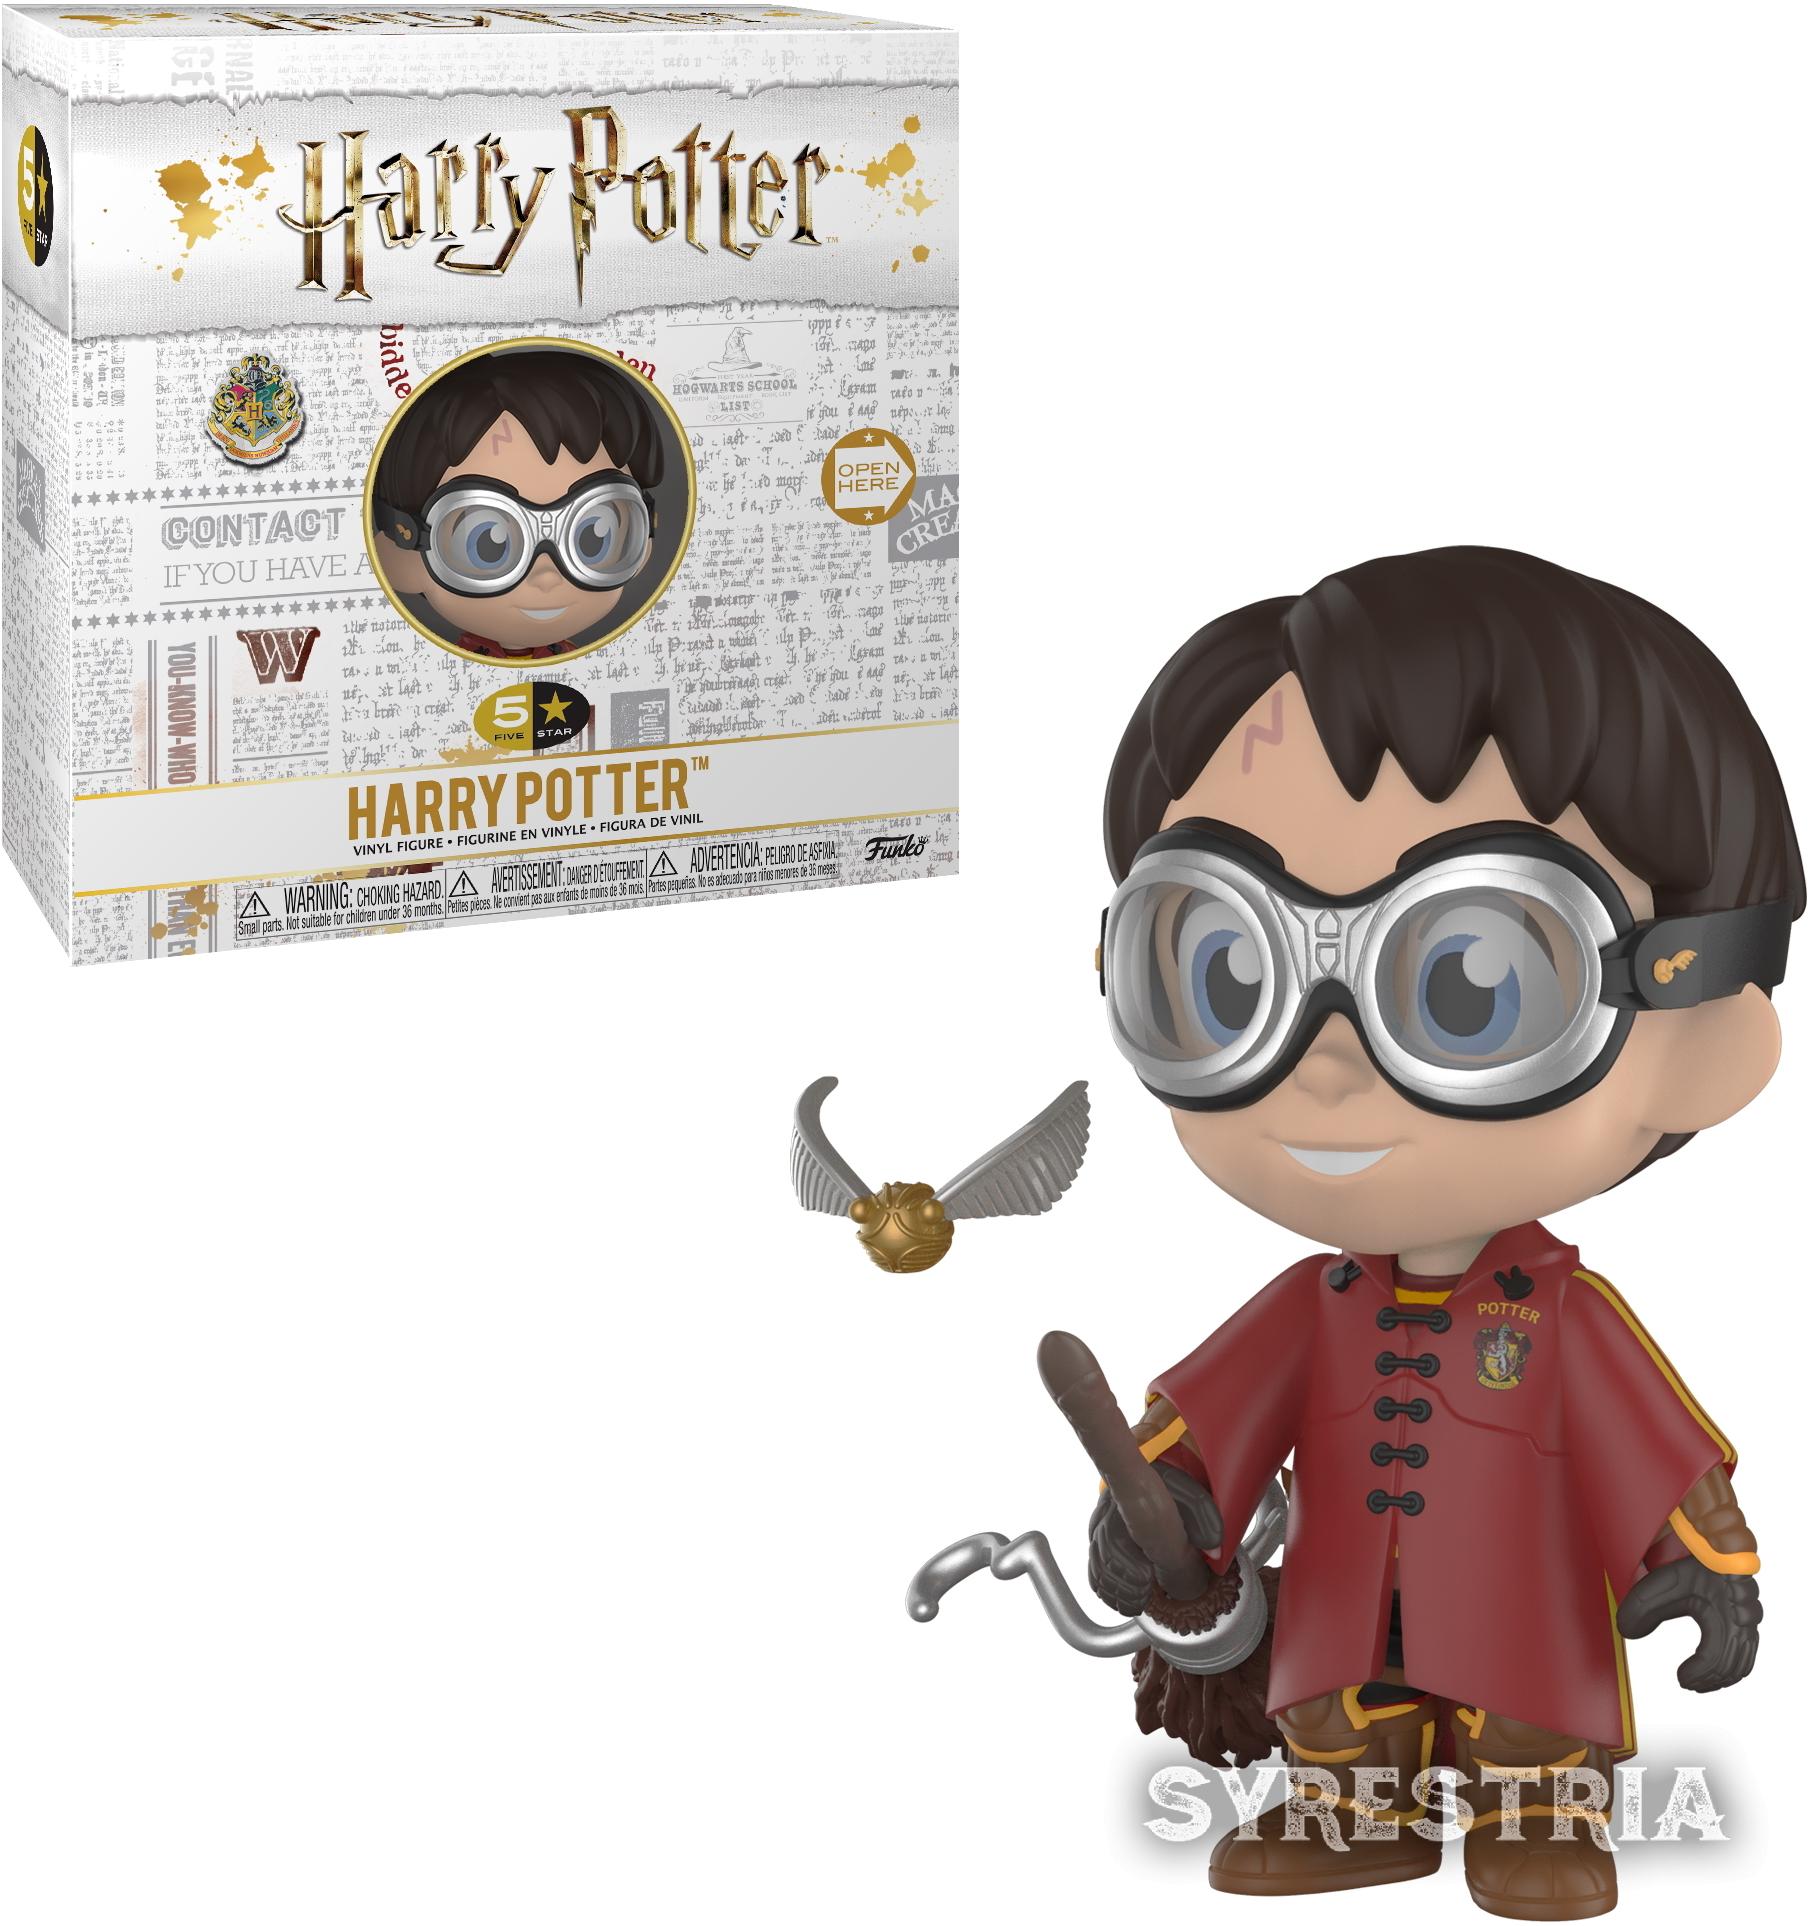 Harry Potter - Harry Potter Quidditch  - Funko 5 Five Star - Vinyl Figure